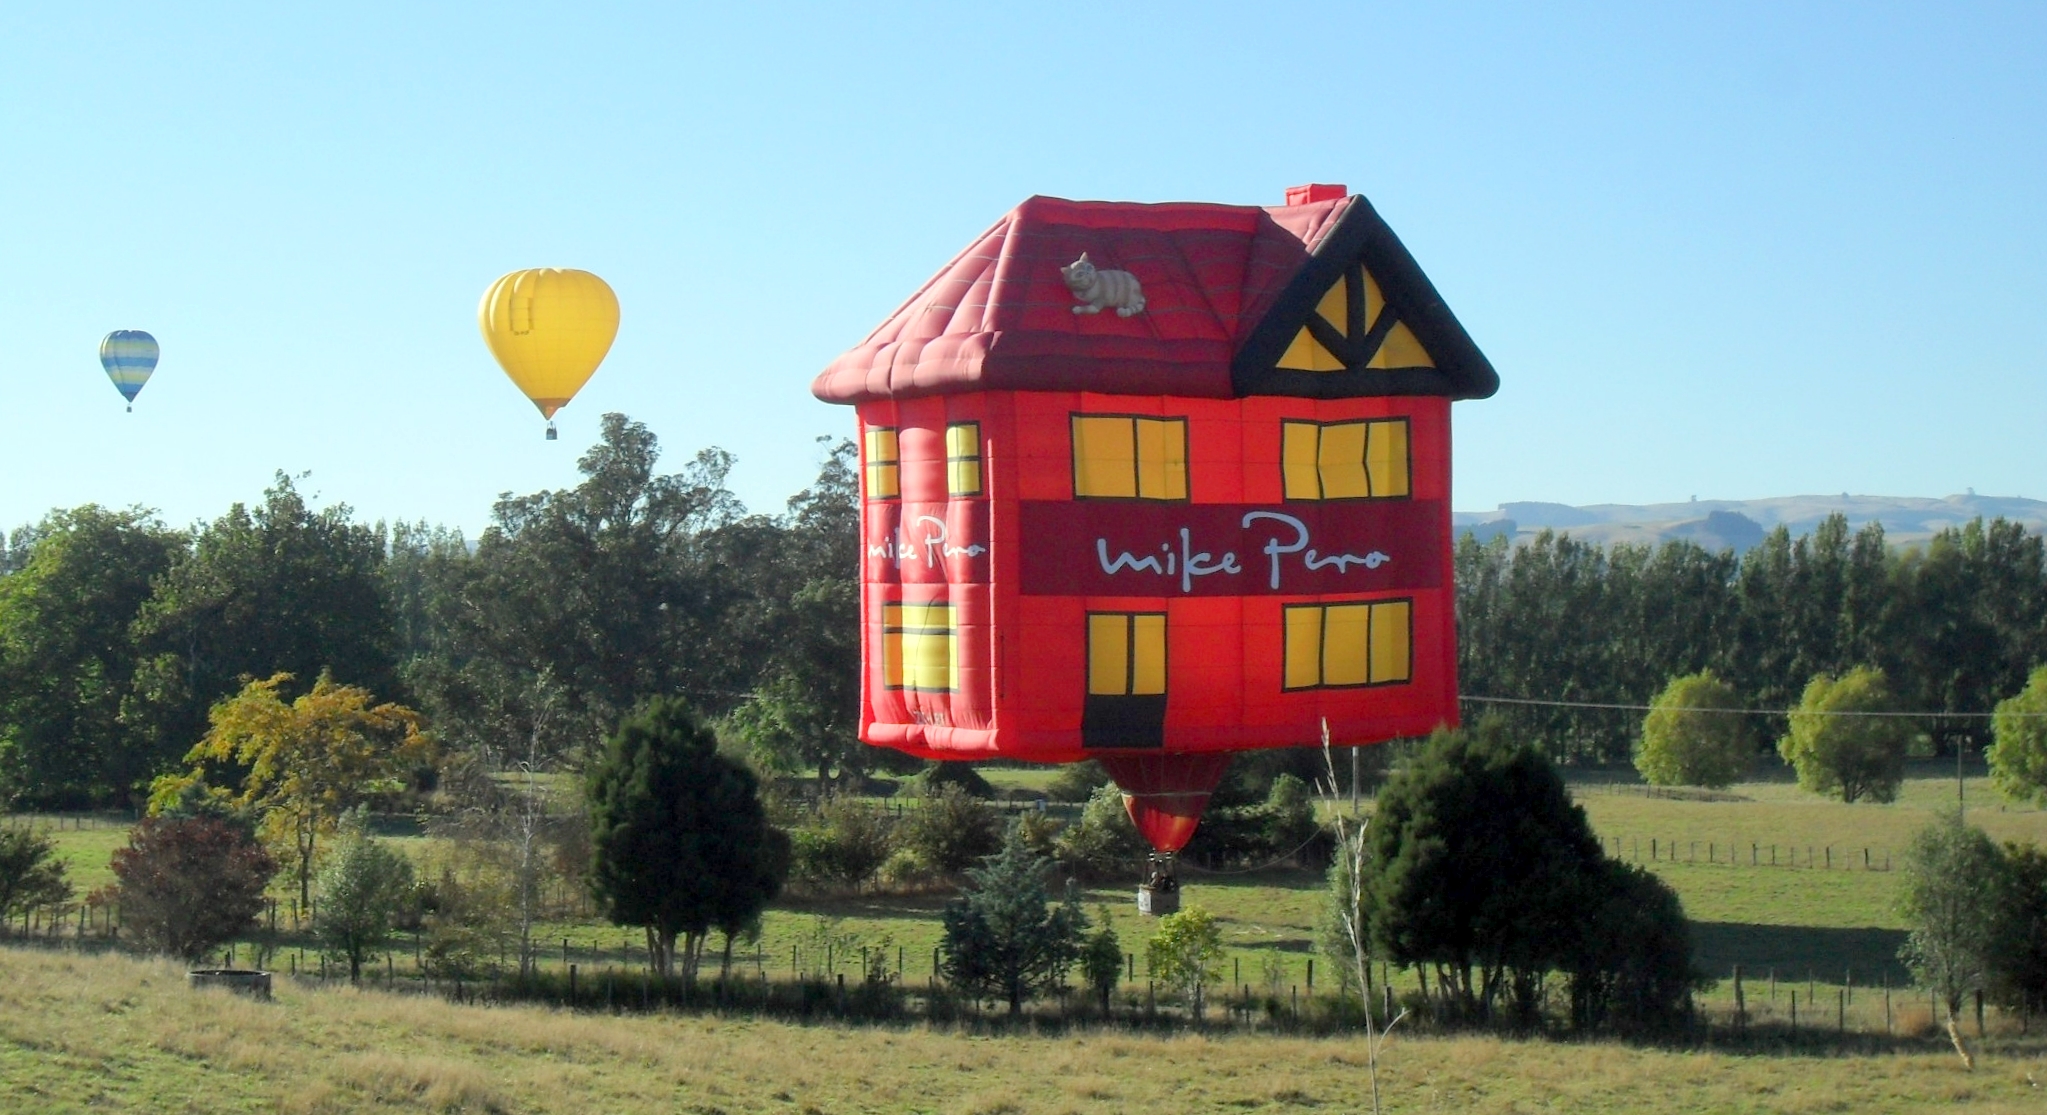 Balloon Expedition Company of New Zealand